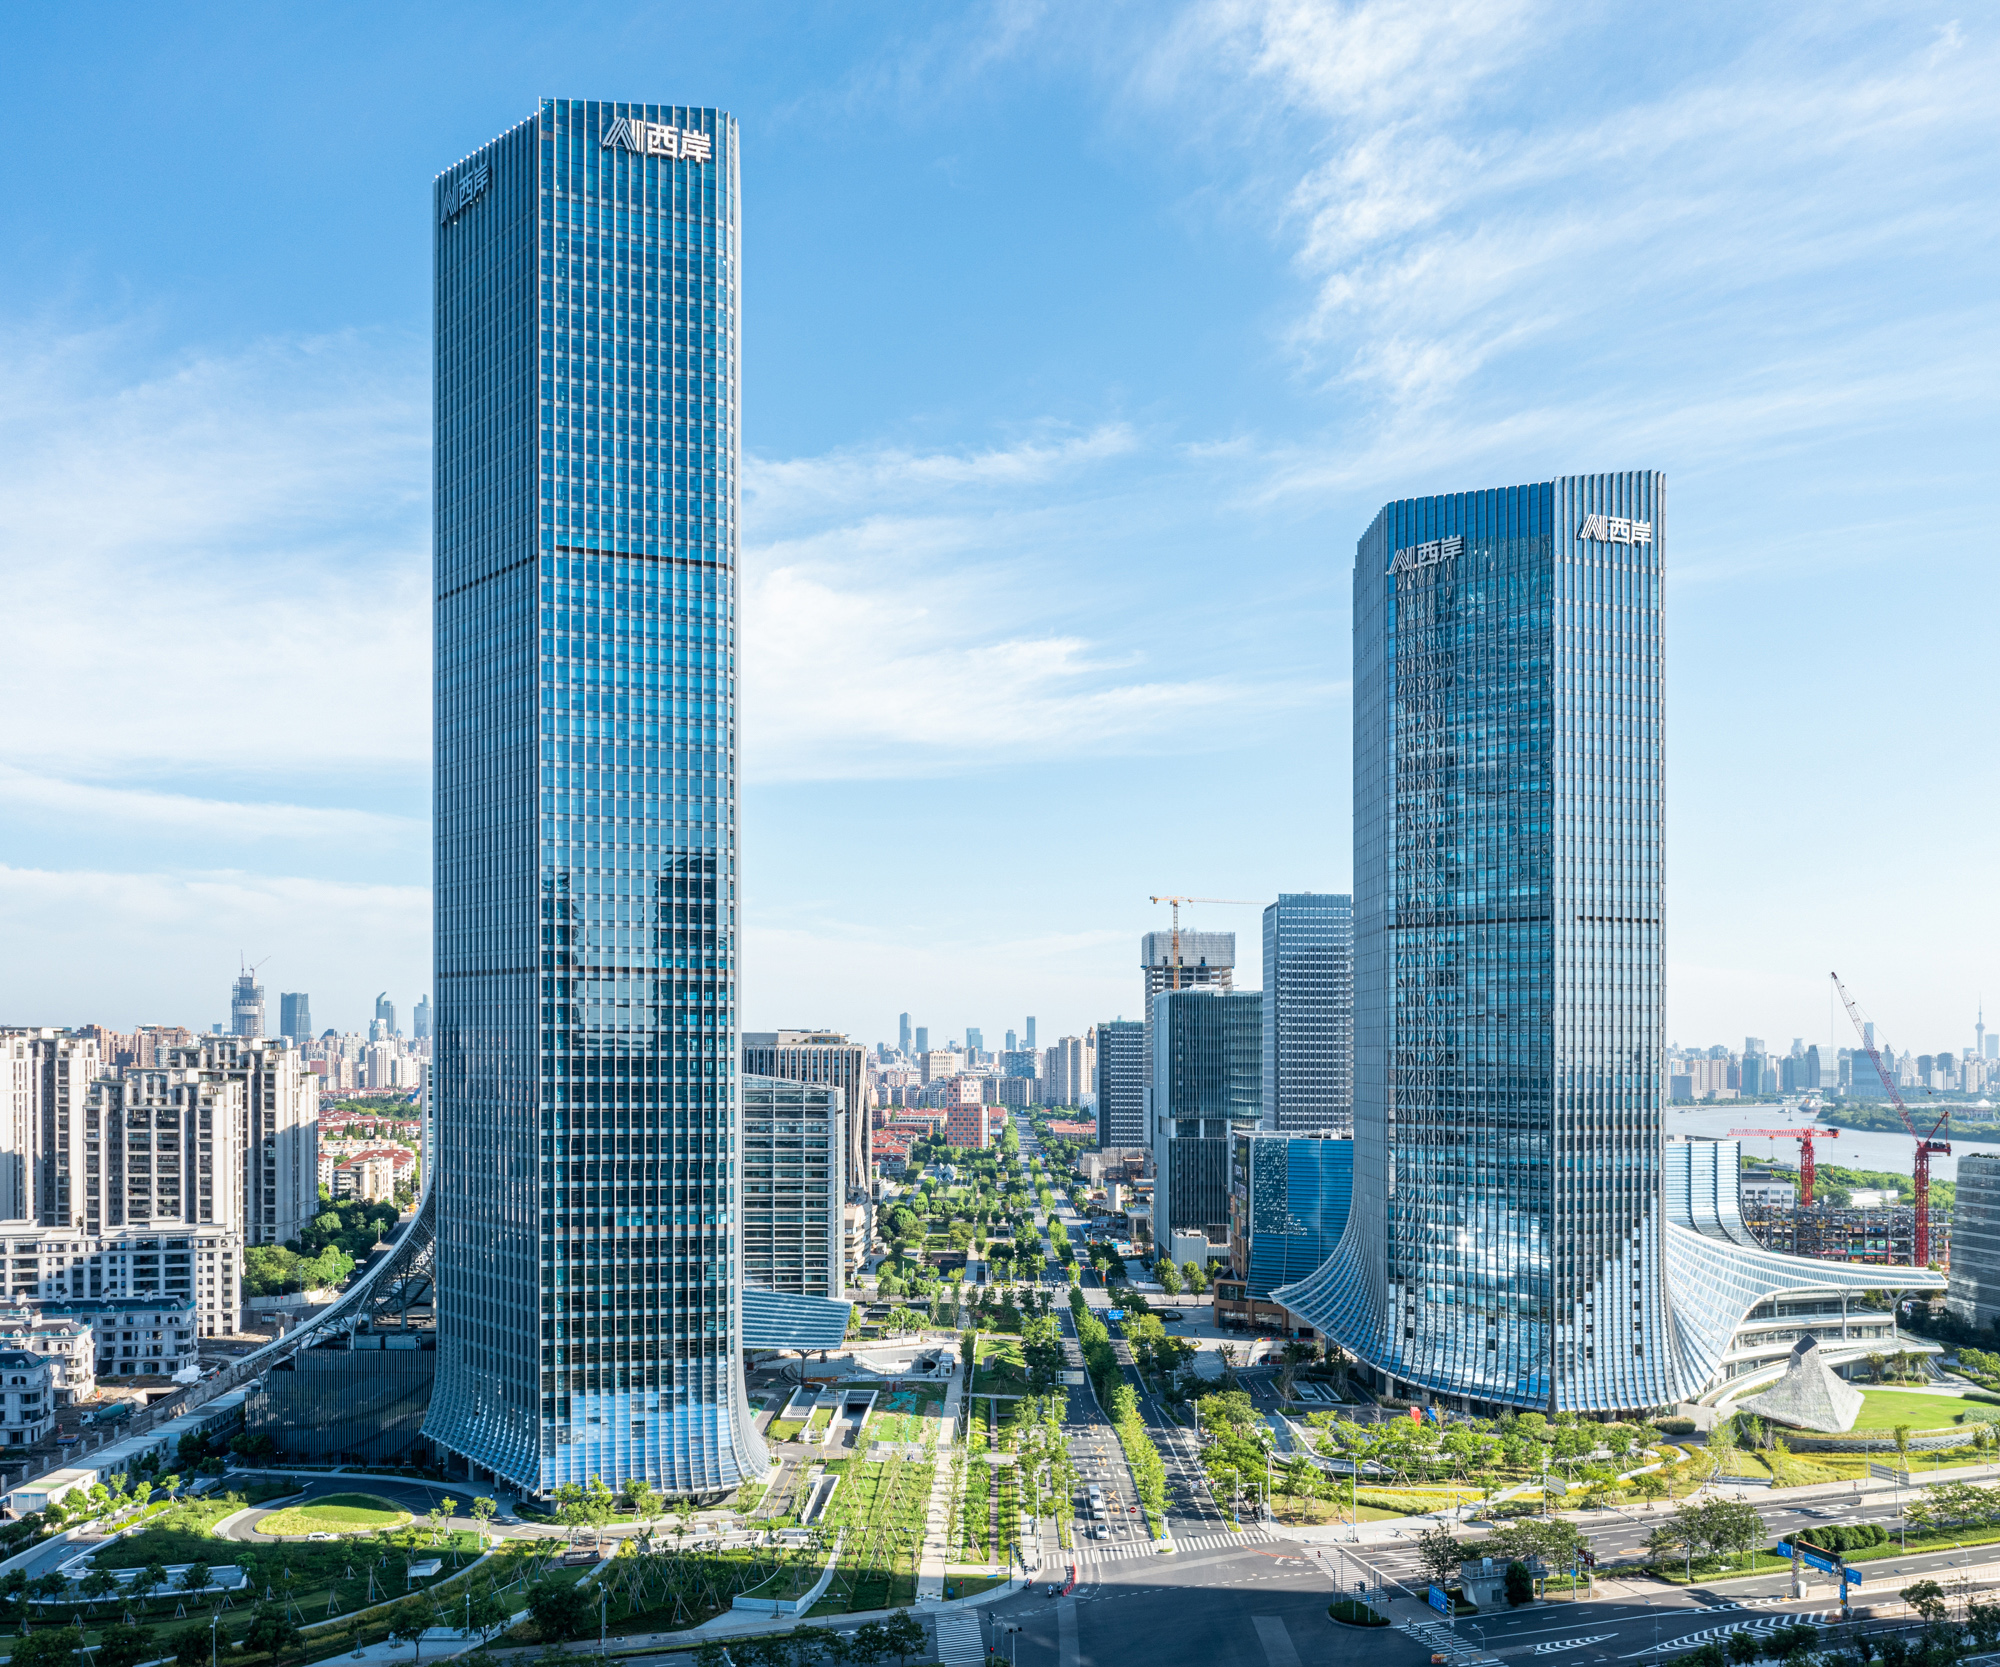 Shanghai AI Tower&Plaza